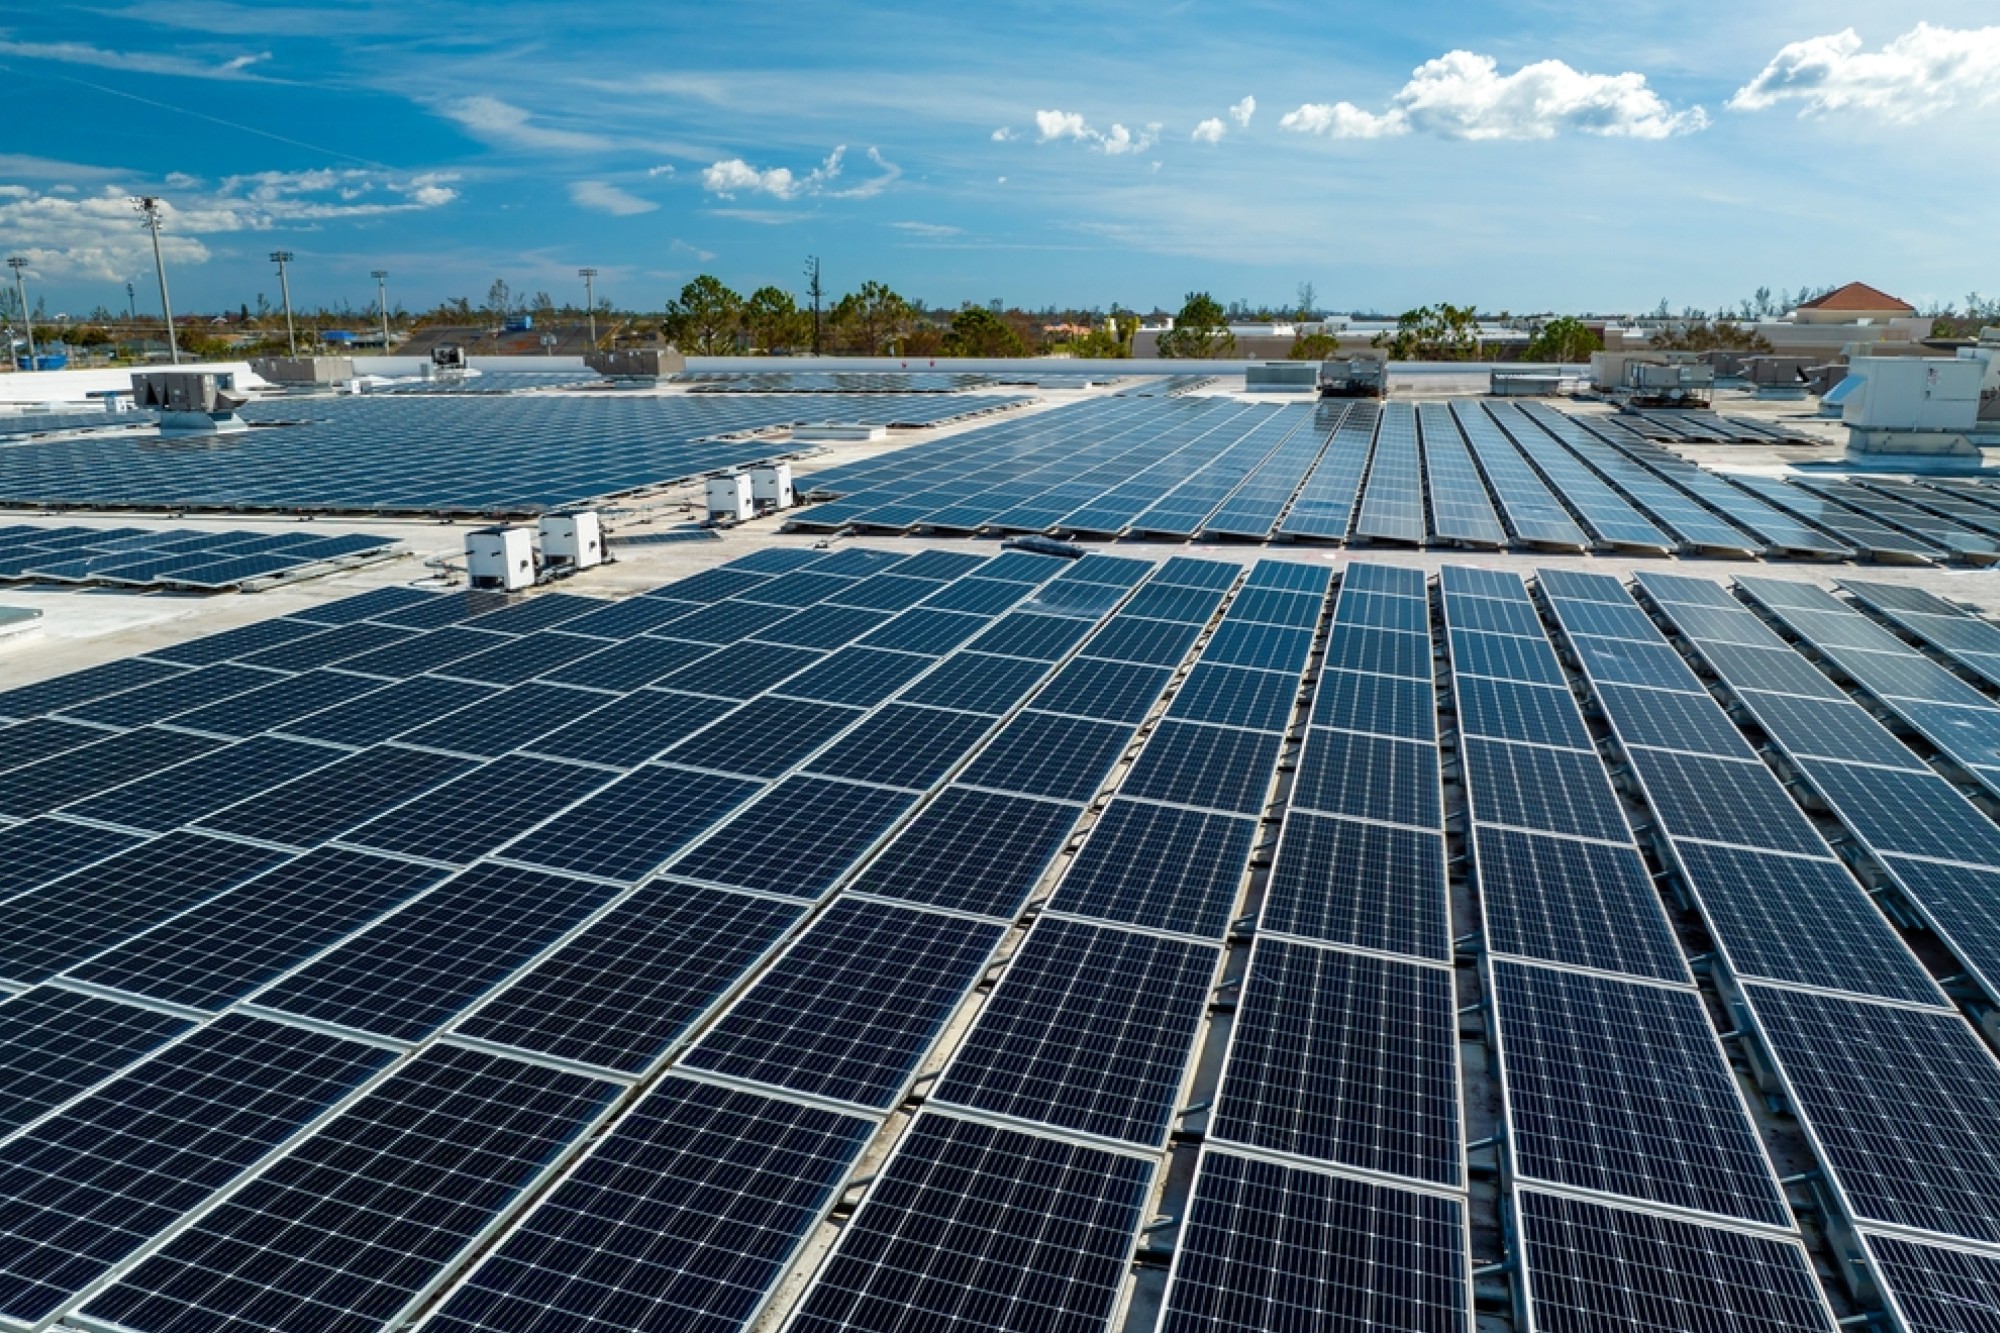 Adani solar expands its operation in Kerala